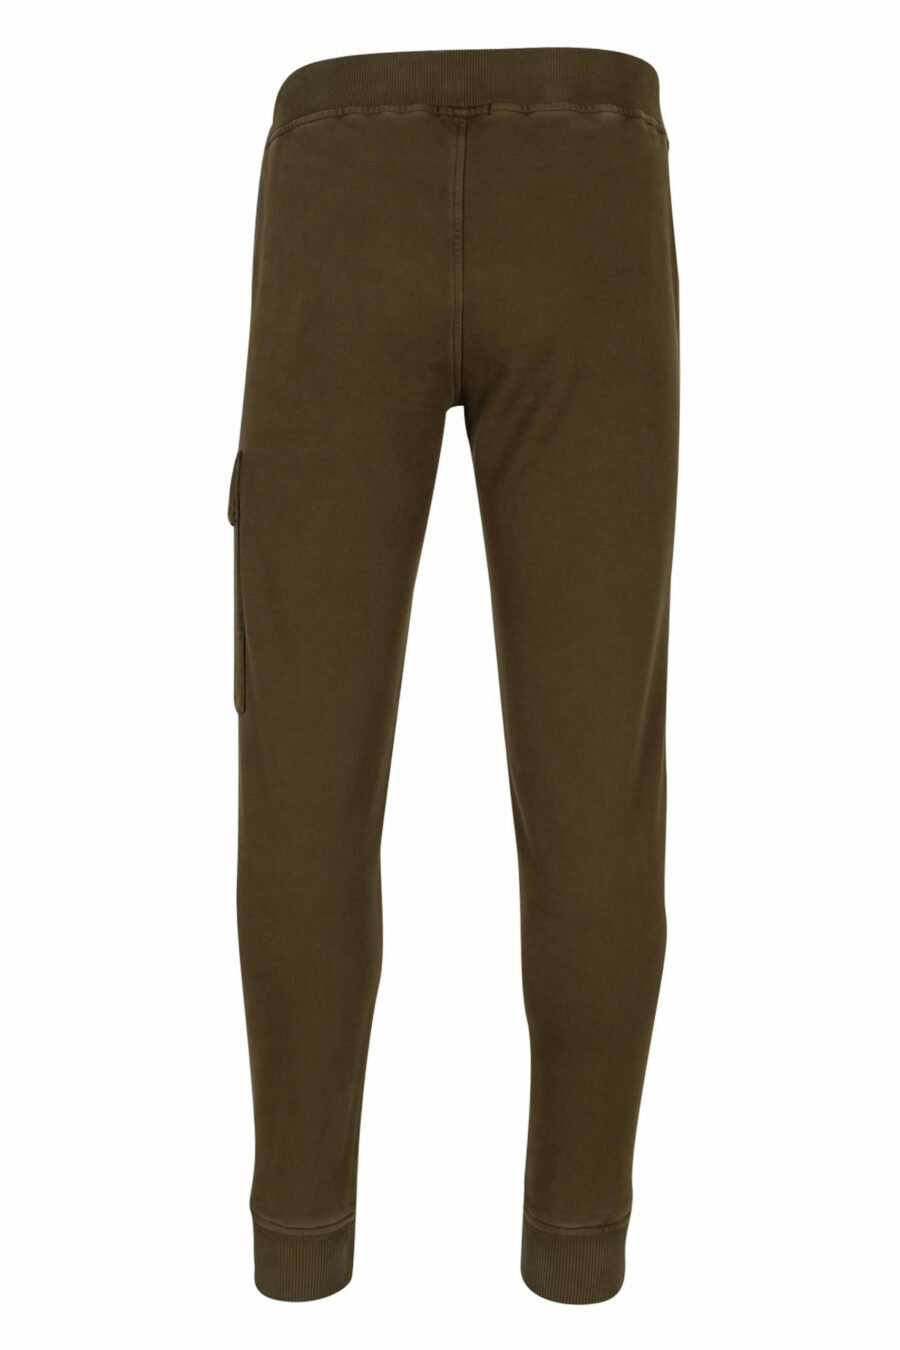 Pantalón de chándal verde militar con bolsillos laterales y logo lente - 7620943651423 2 scaled